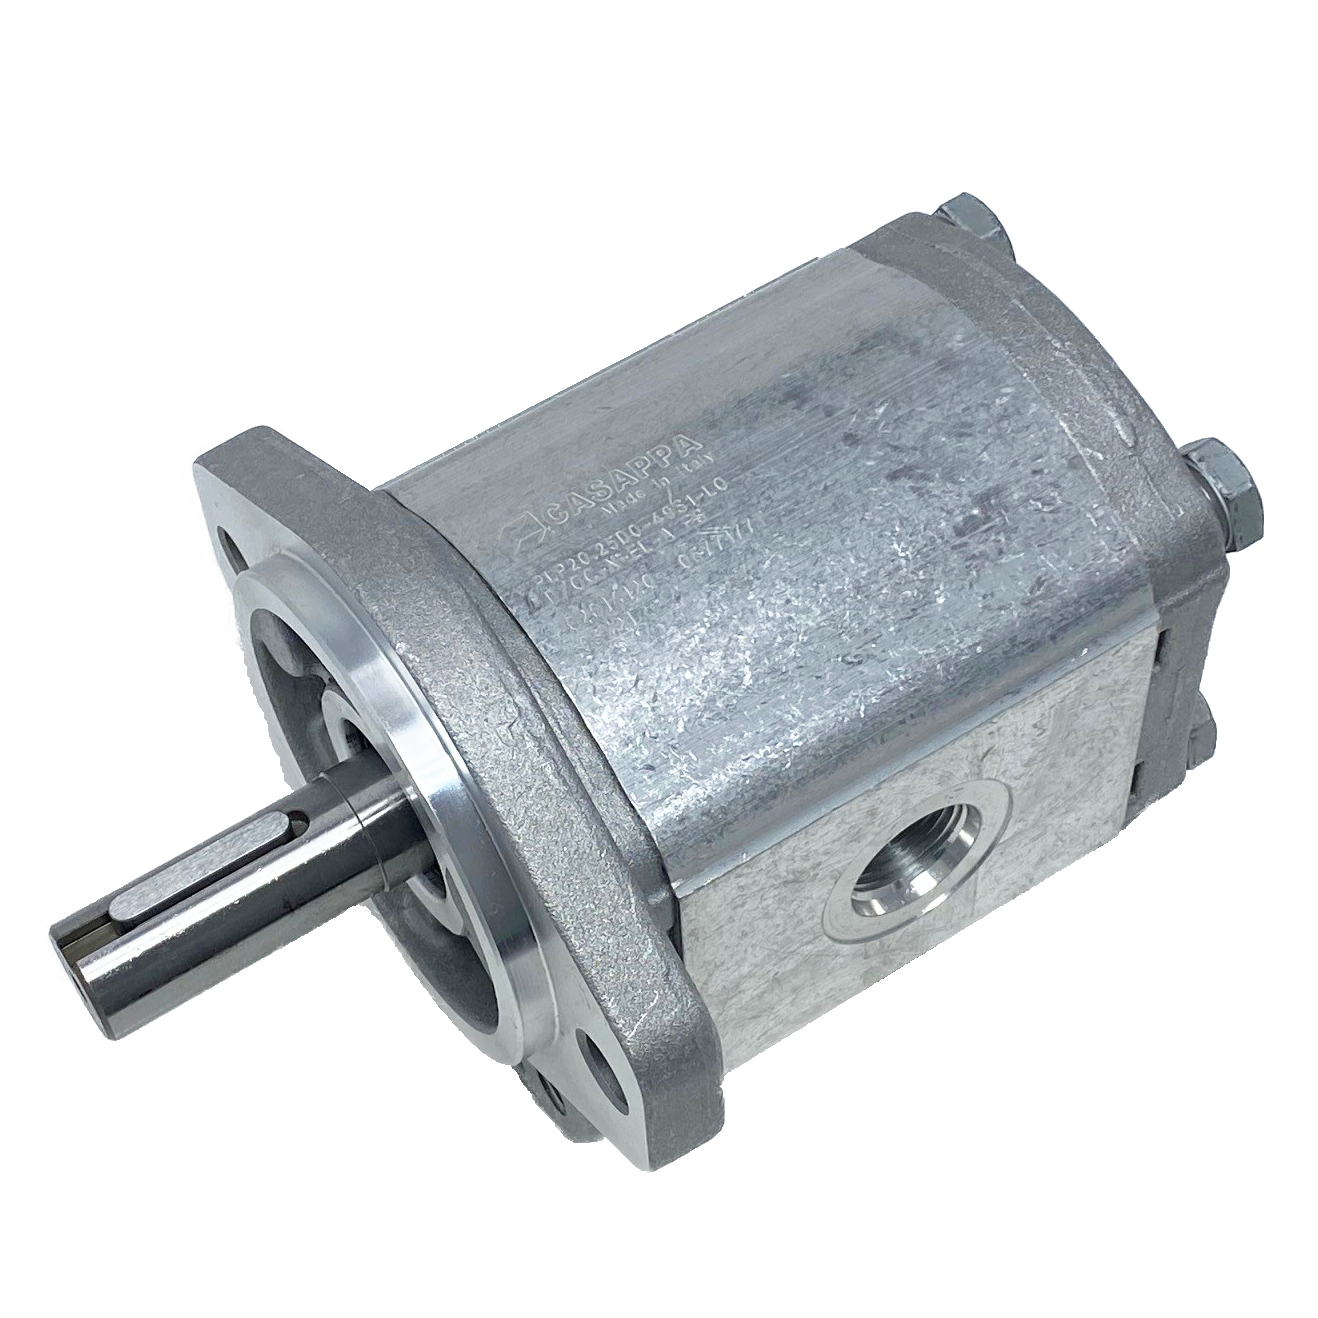 PLM20.25B0-49S1-LOC/OD-N-EL : Casappa Polaris Gear Motor, 26.42cc, 2465psi Rated, 3045RPM, Reversible Interior Drain, 3/4" Bore x 3/16" Key Shaft, SAE A 2-Bolt Flange, 0.625 (5/8") #10 SAE Inlet, 0.75 (3/4") #12 SAE Outlet, Aluminum Body & Flange